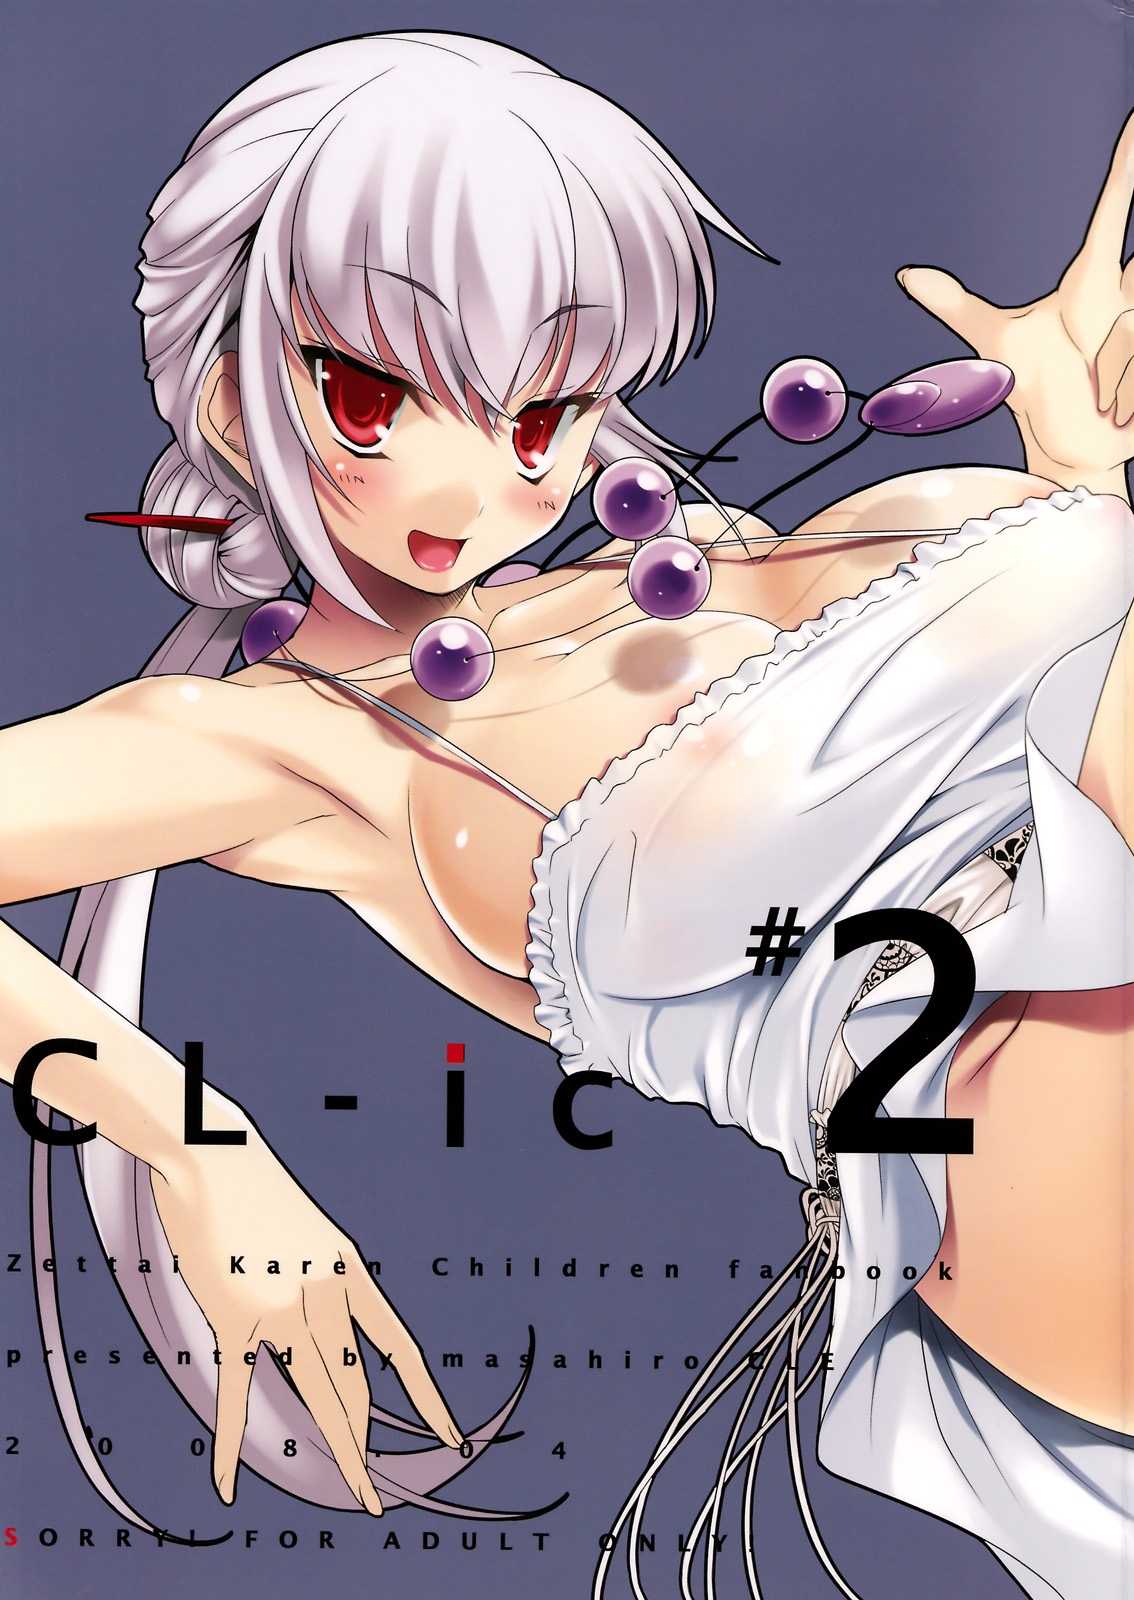 (COMIC1☆2)[etcycle (Cle Masahiro)] CL-ic #2 (Zettai Karen Children) (COMIC1☆2)[etcycle (呉マサヒロ)] CL-ic #2 (絶対可憐チルドレン)